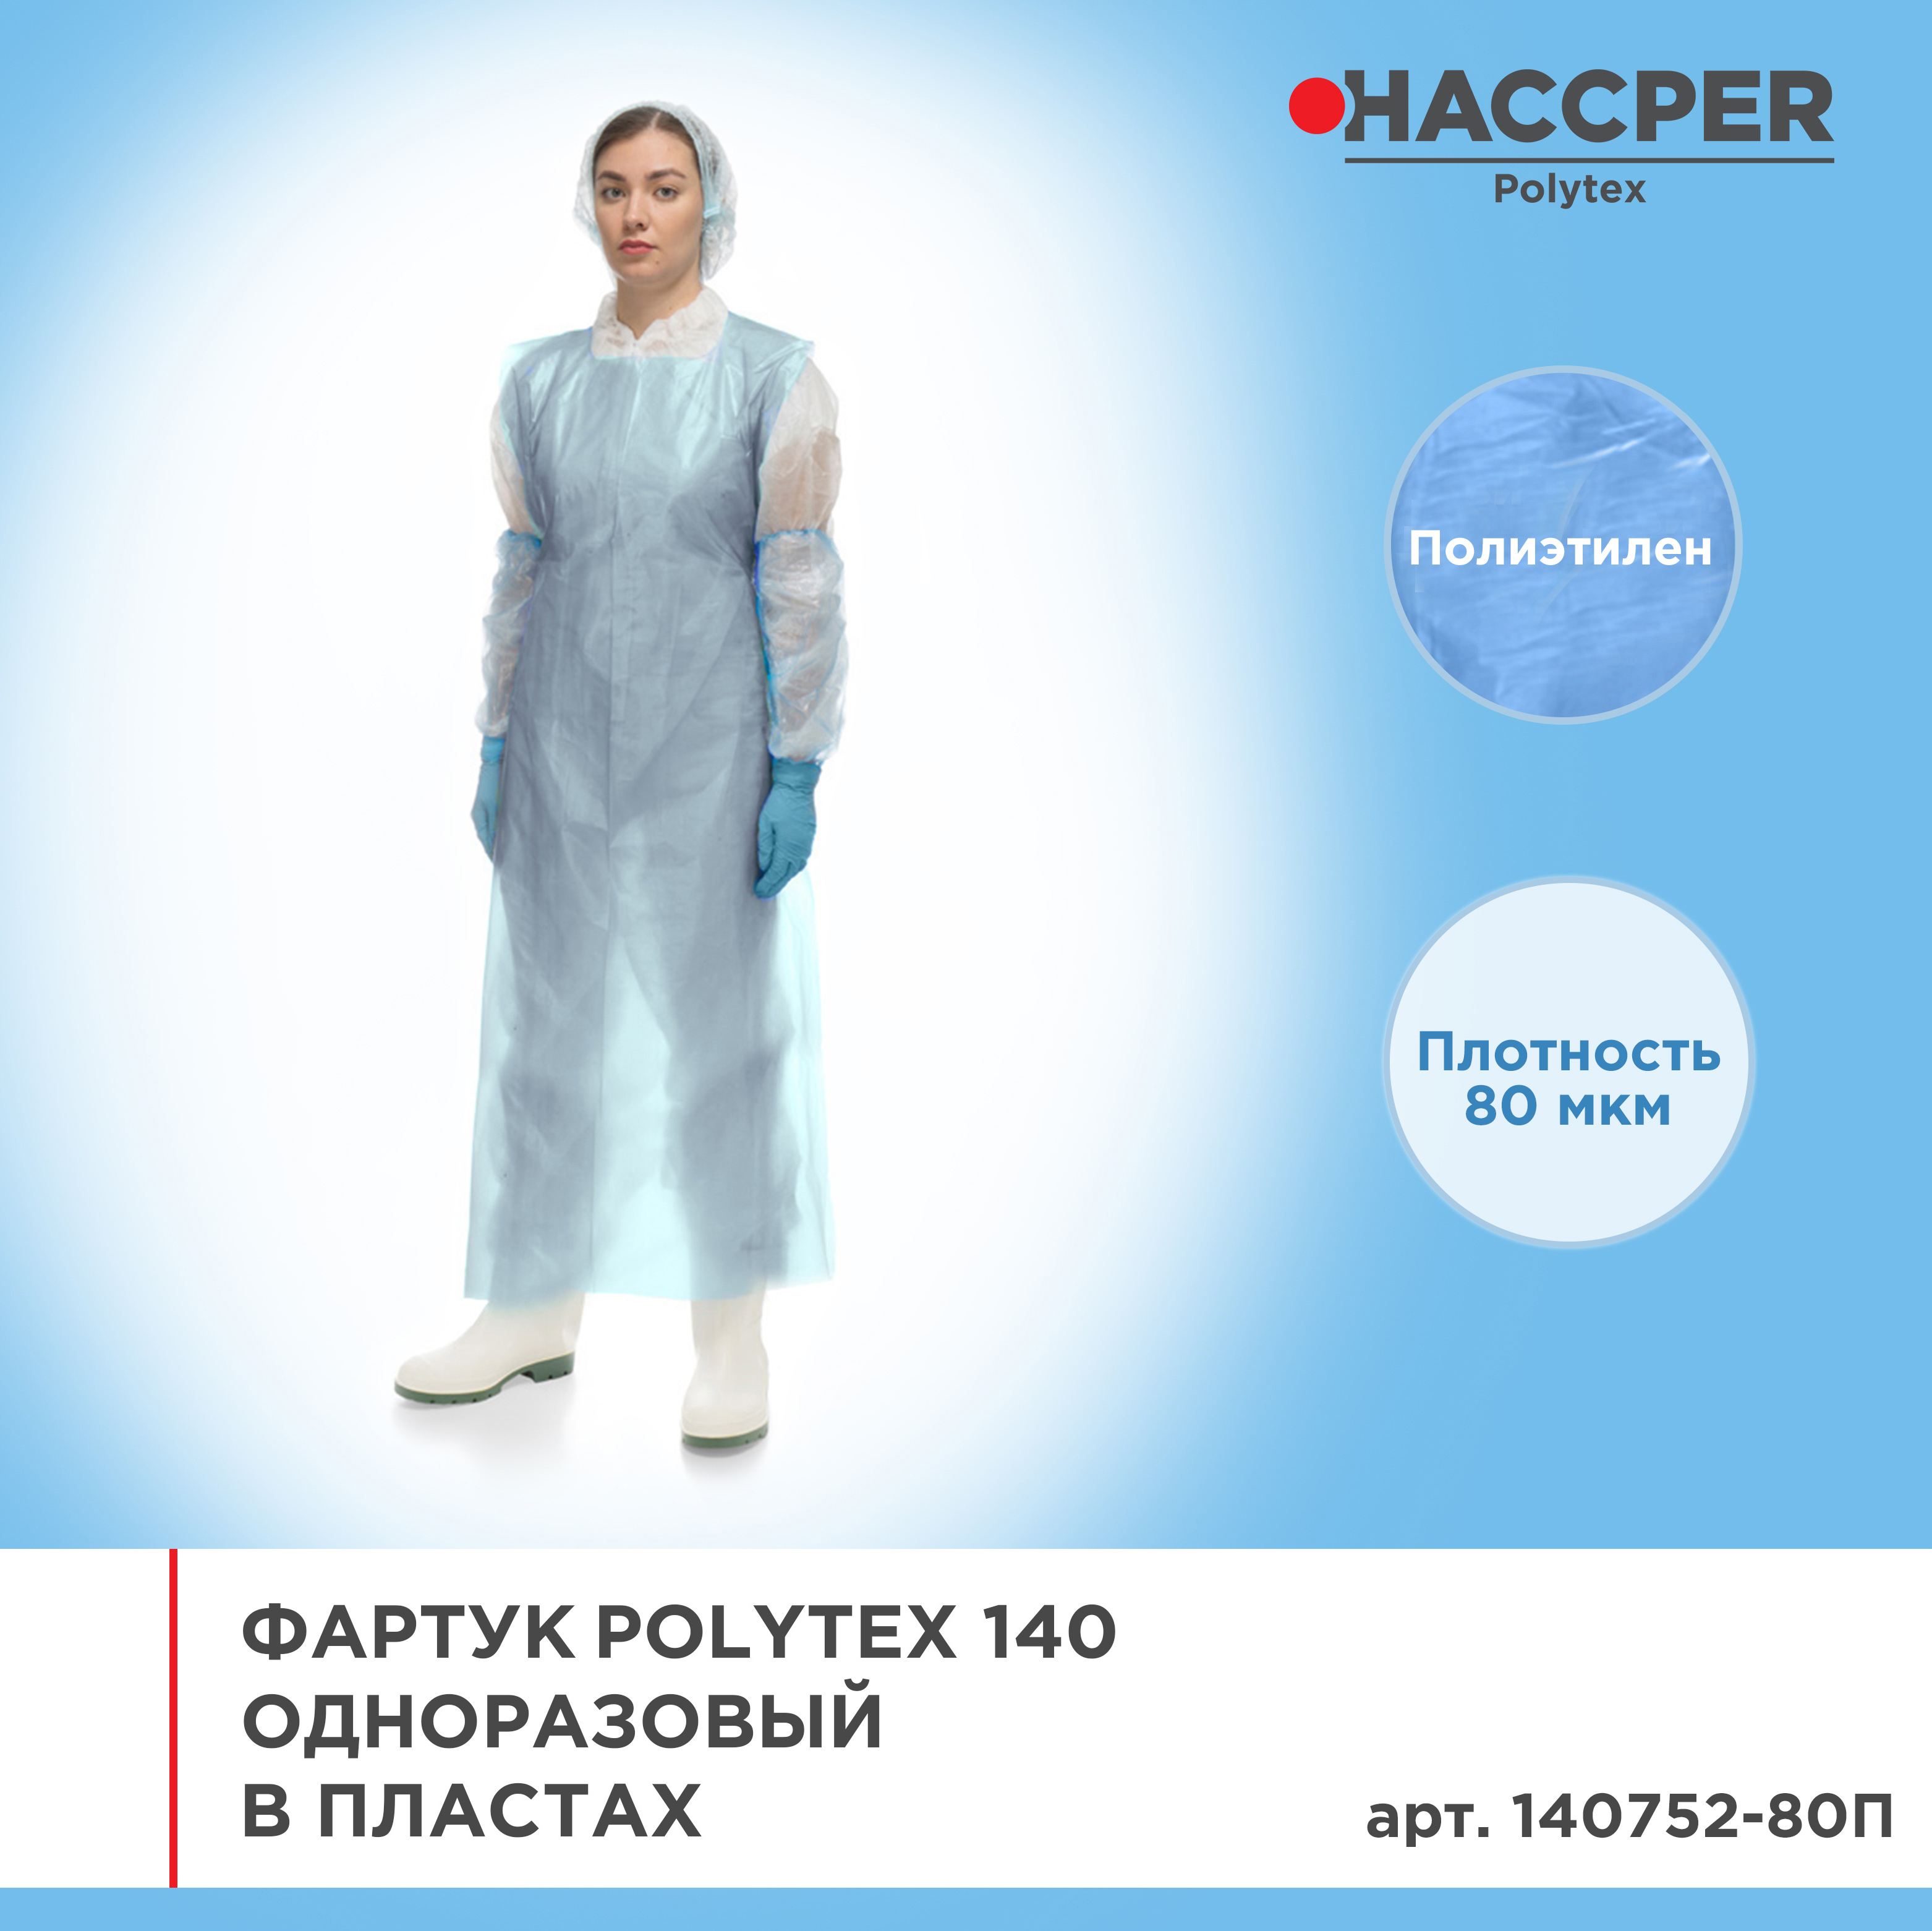 Фартук HACCPER Polytex 140 одноразовый в пластах, 1325*750 мм, 80 мкм, голубой